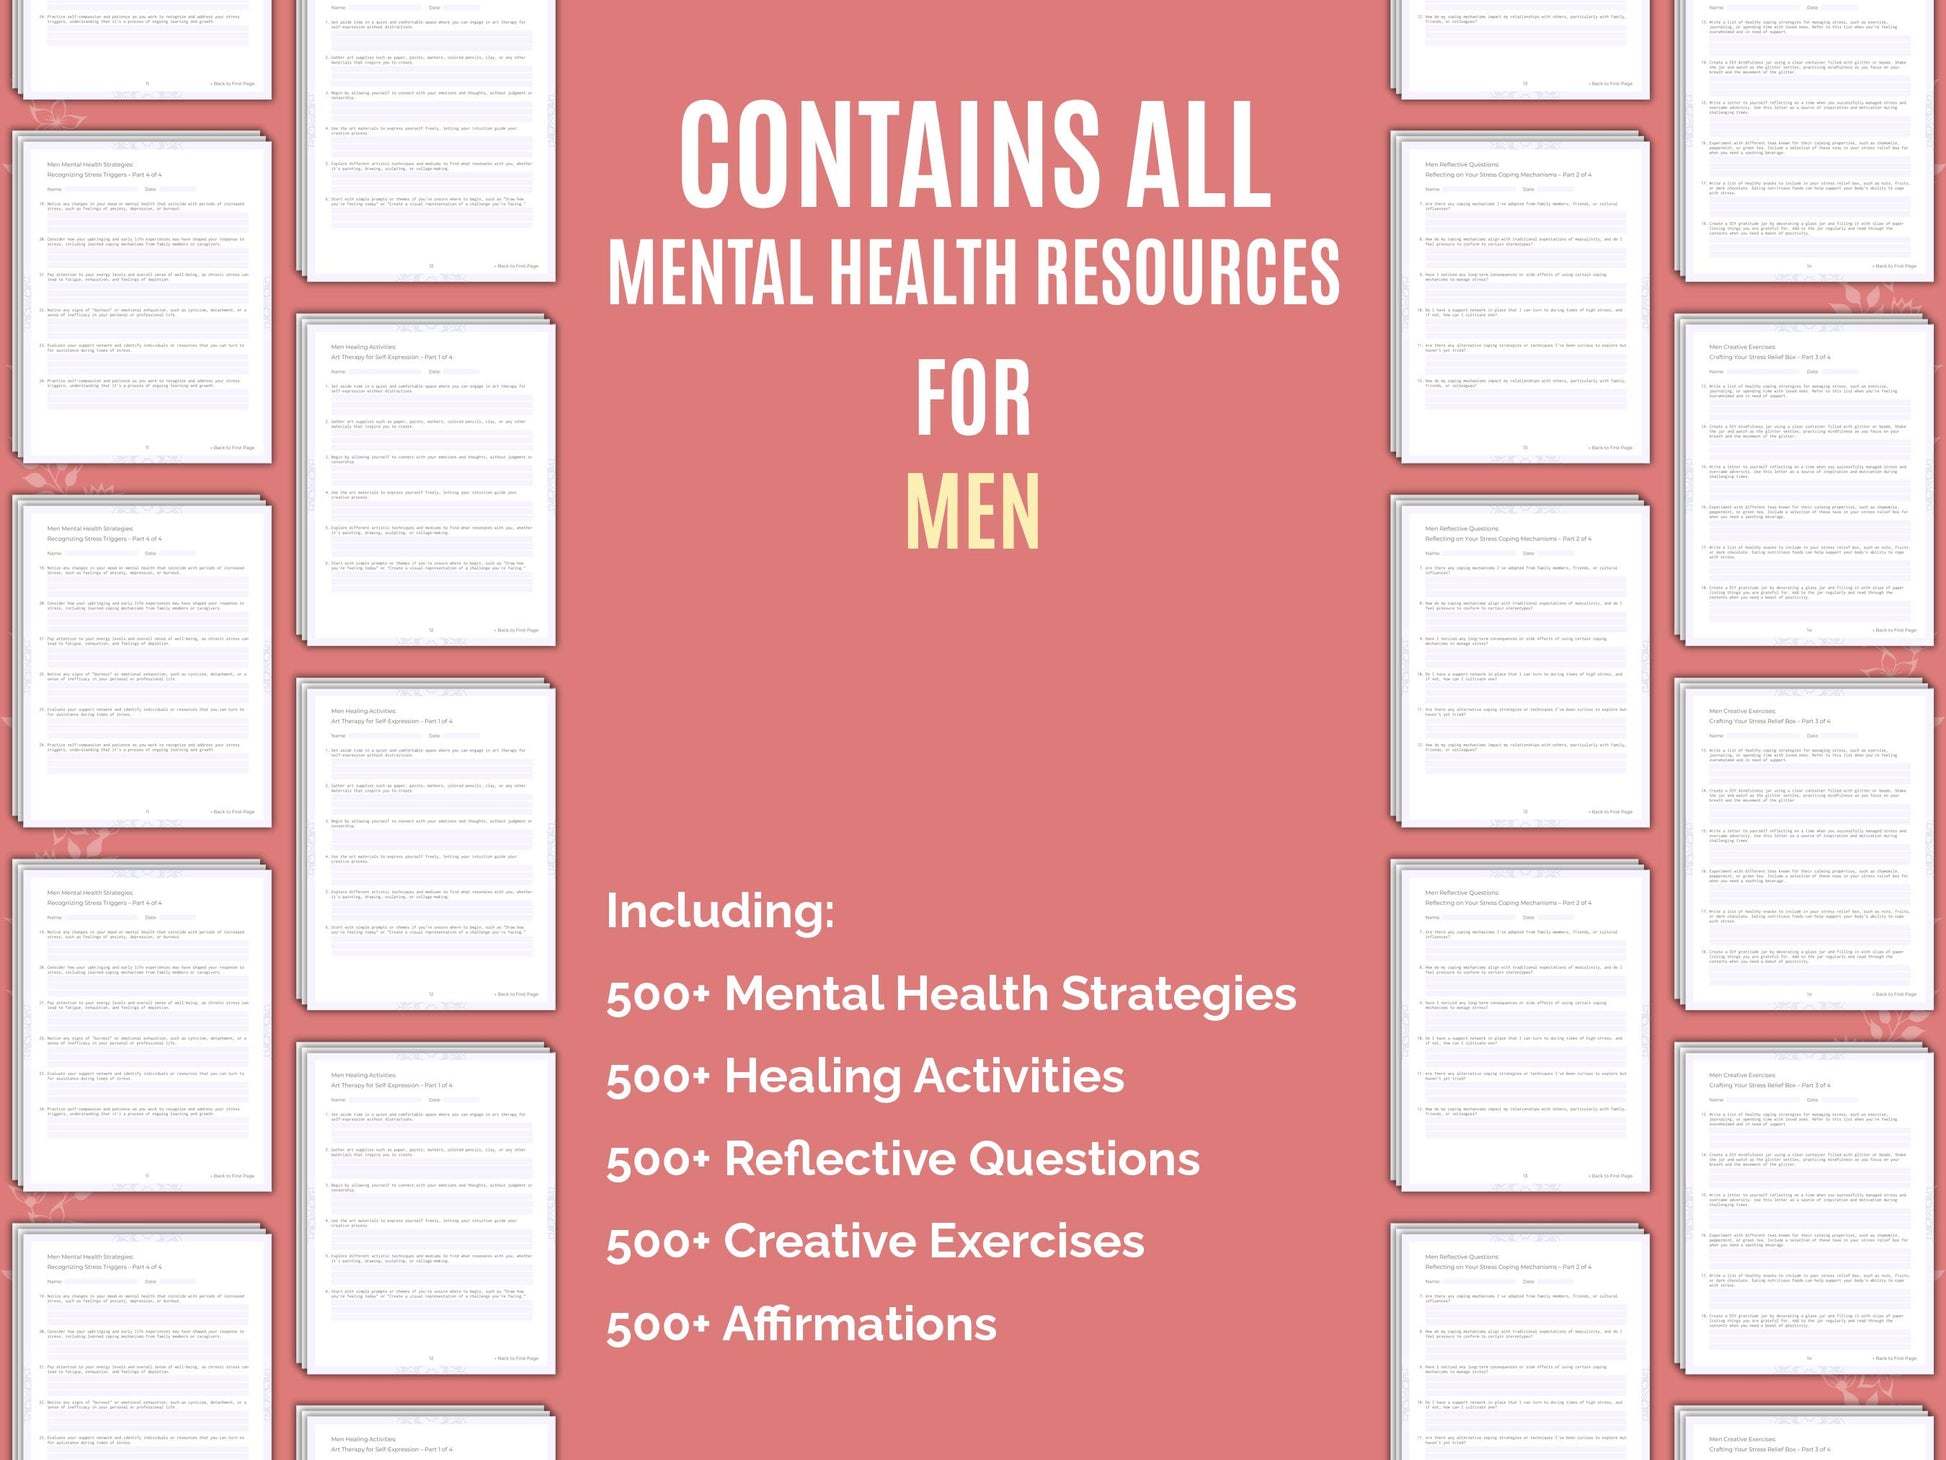 Mental Health Resource